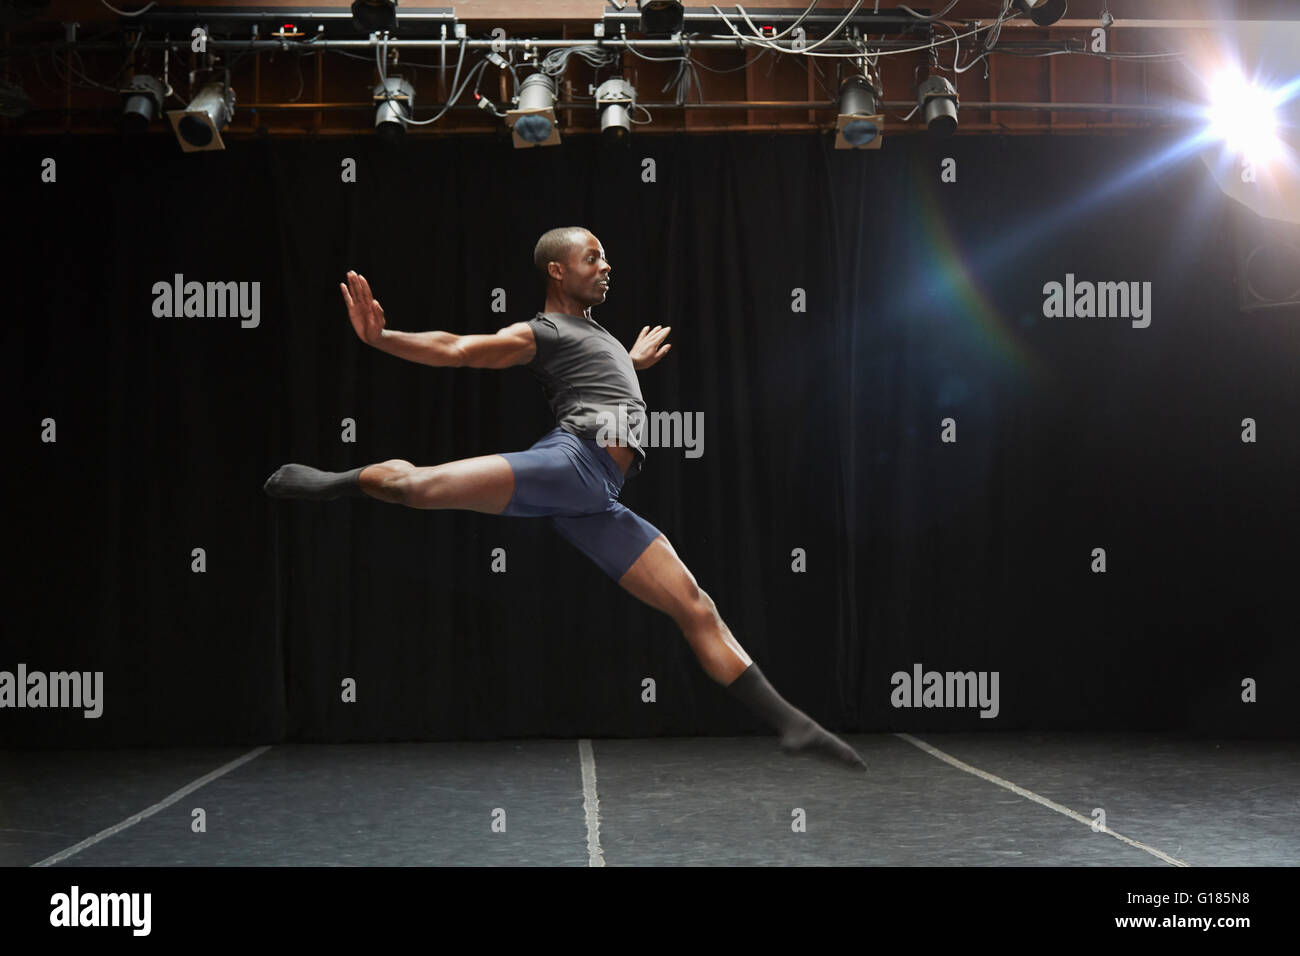 Dancer in midair pose Stock Photo